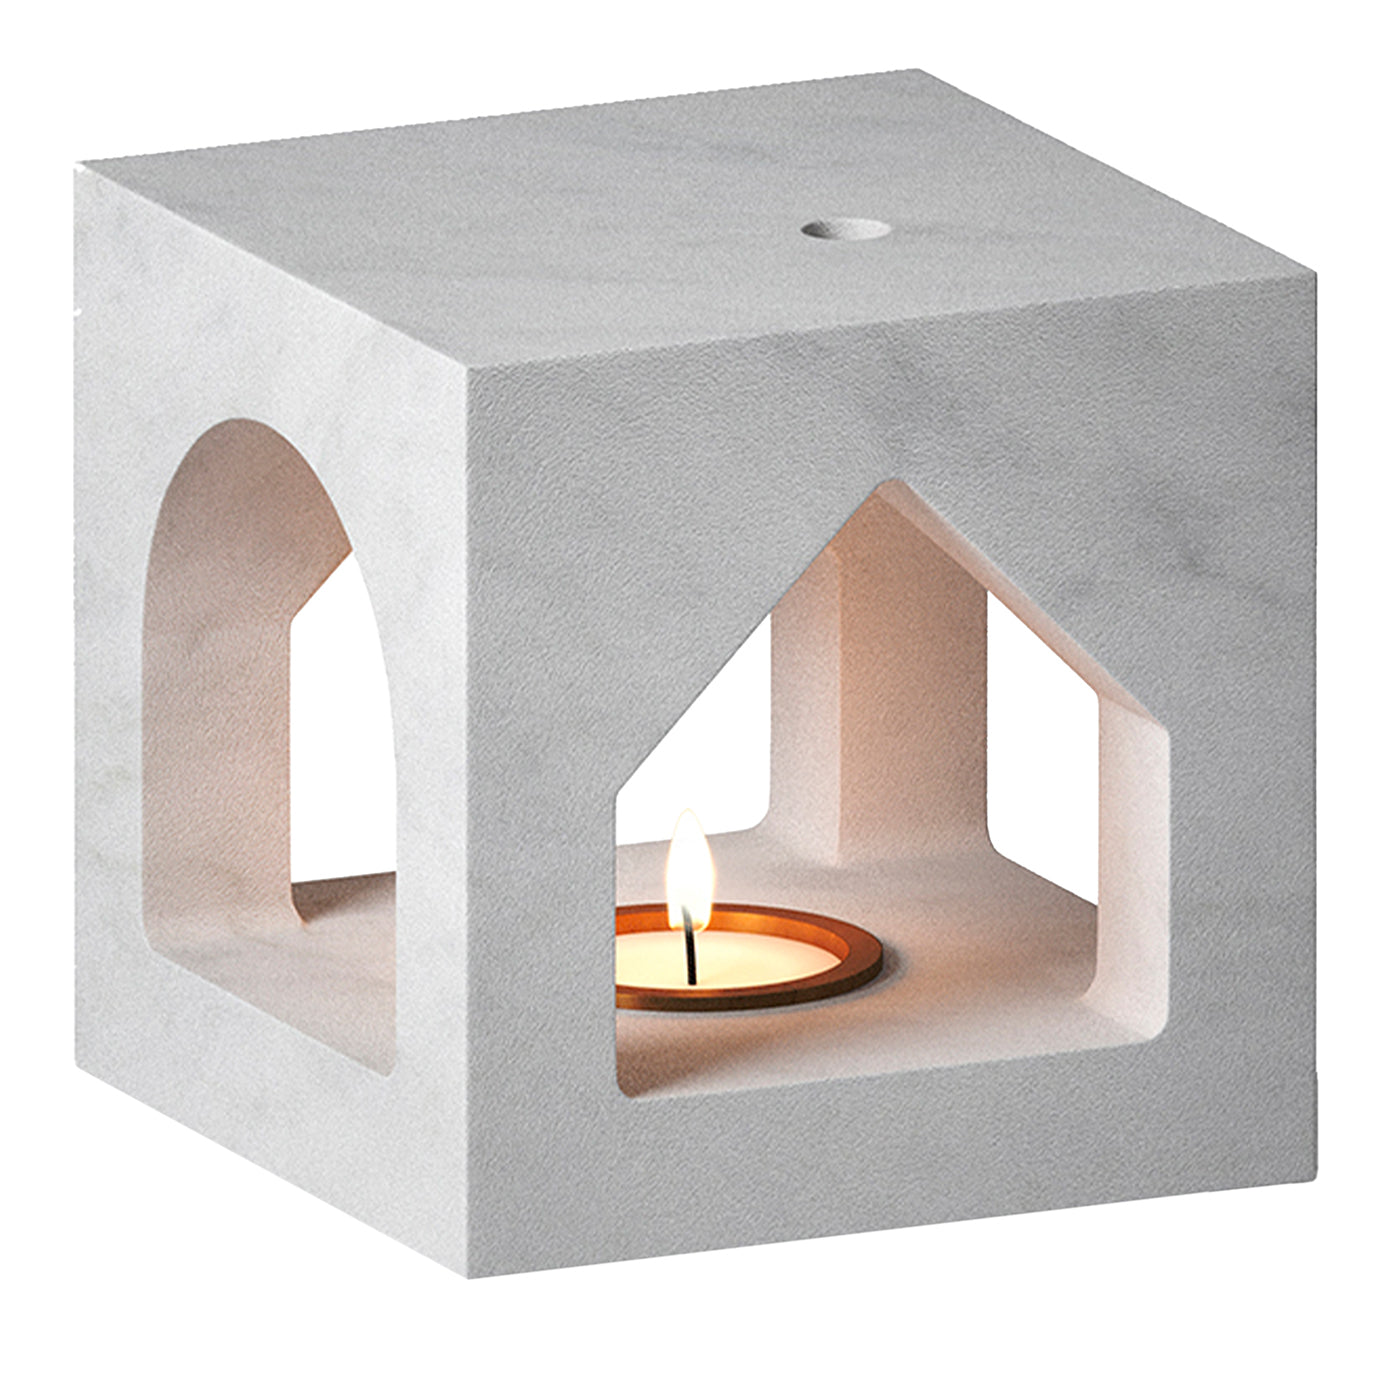 The Village - MA House Carrara Candleholder by Kengo Kuma - Main view